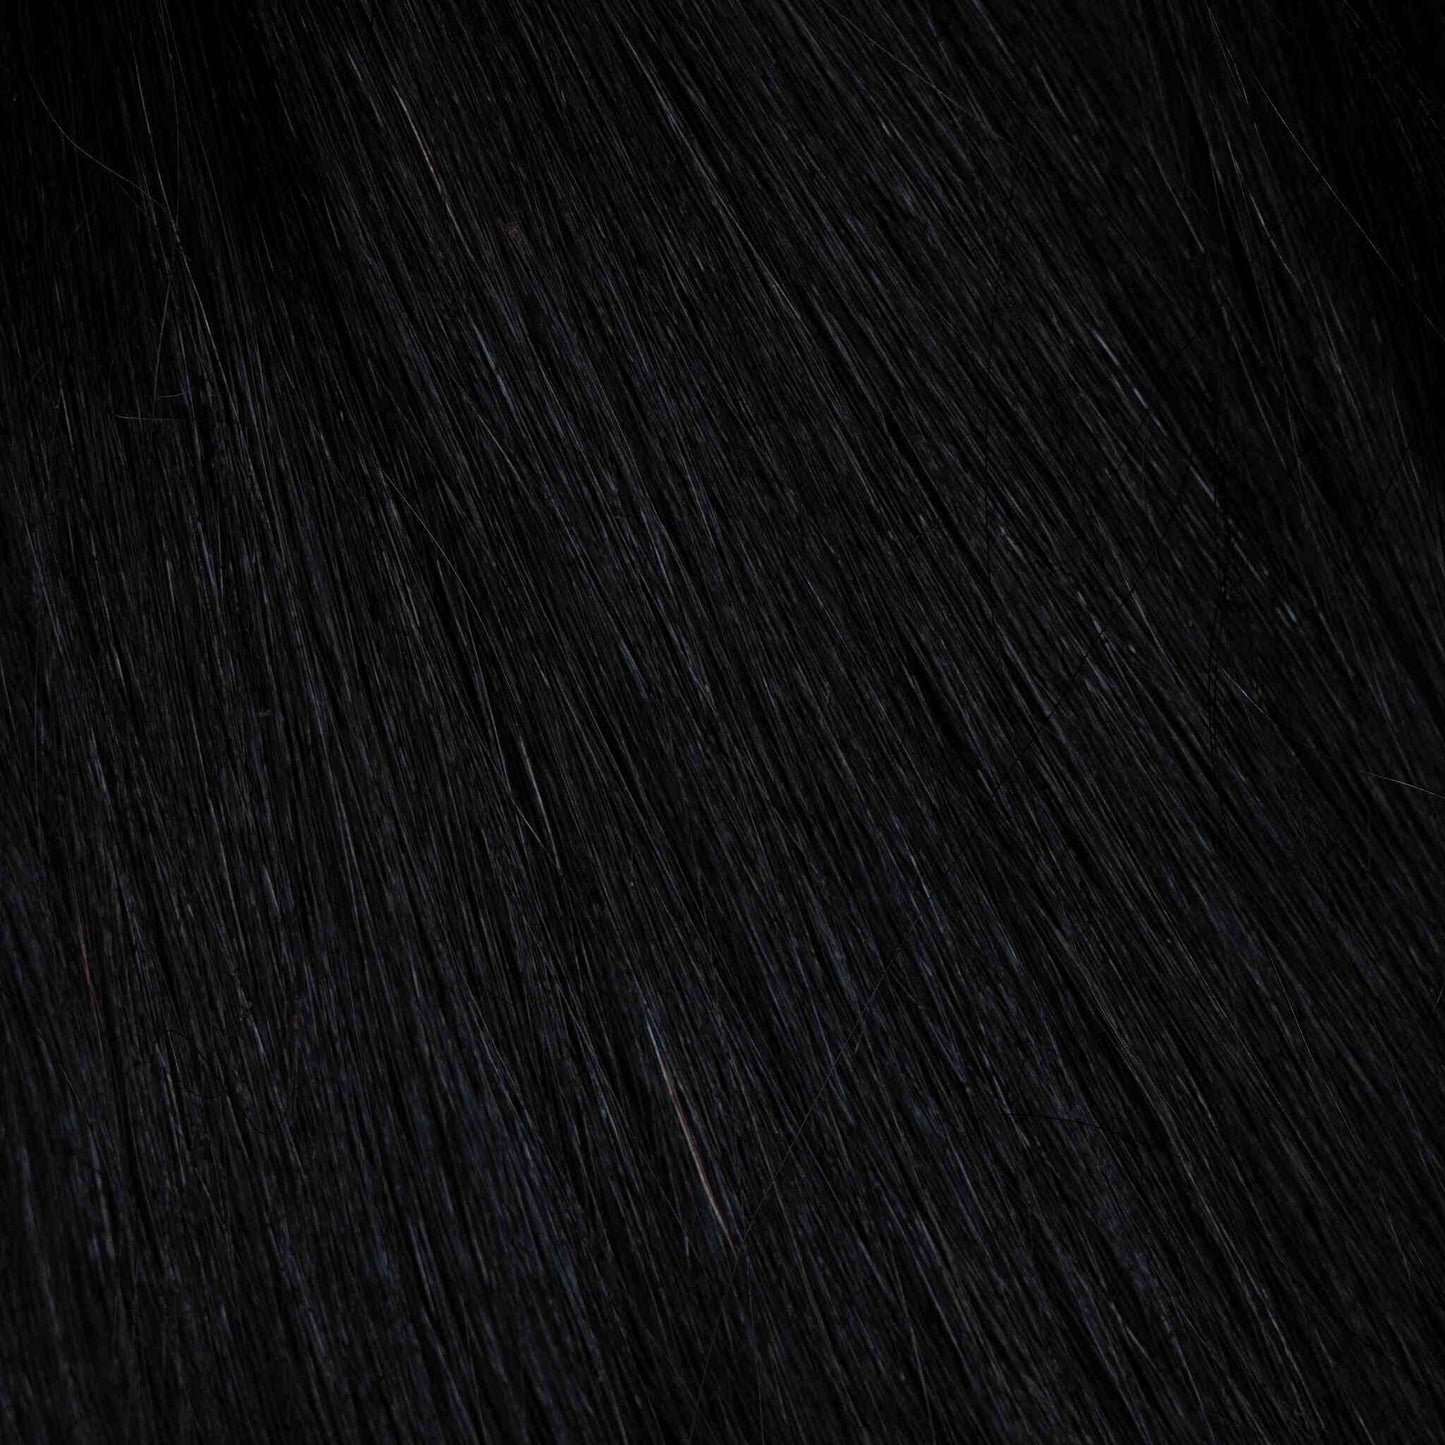 K-Tip 18" 25g Professional Hair Extensions - Jet Black #1